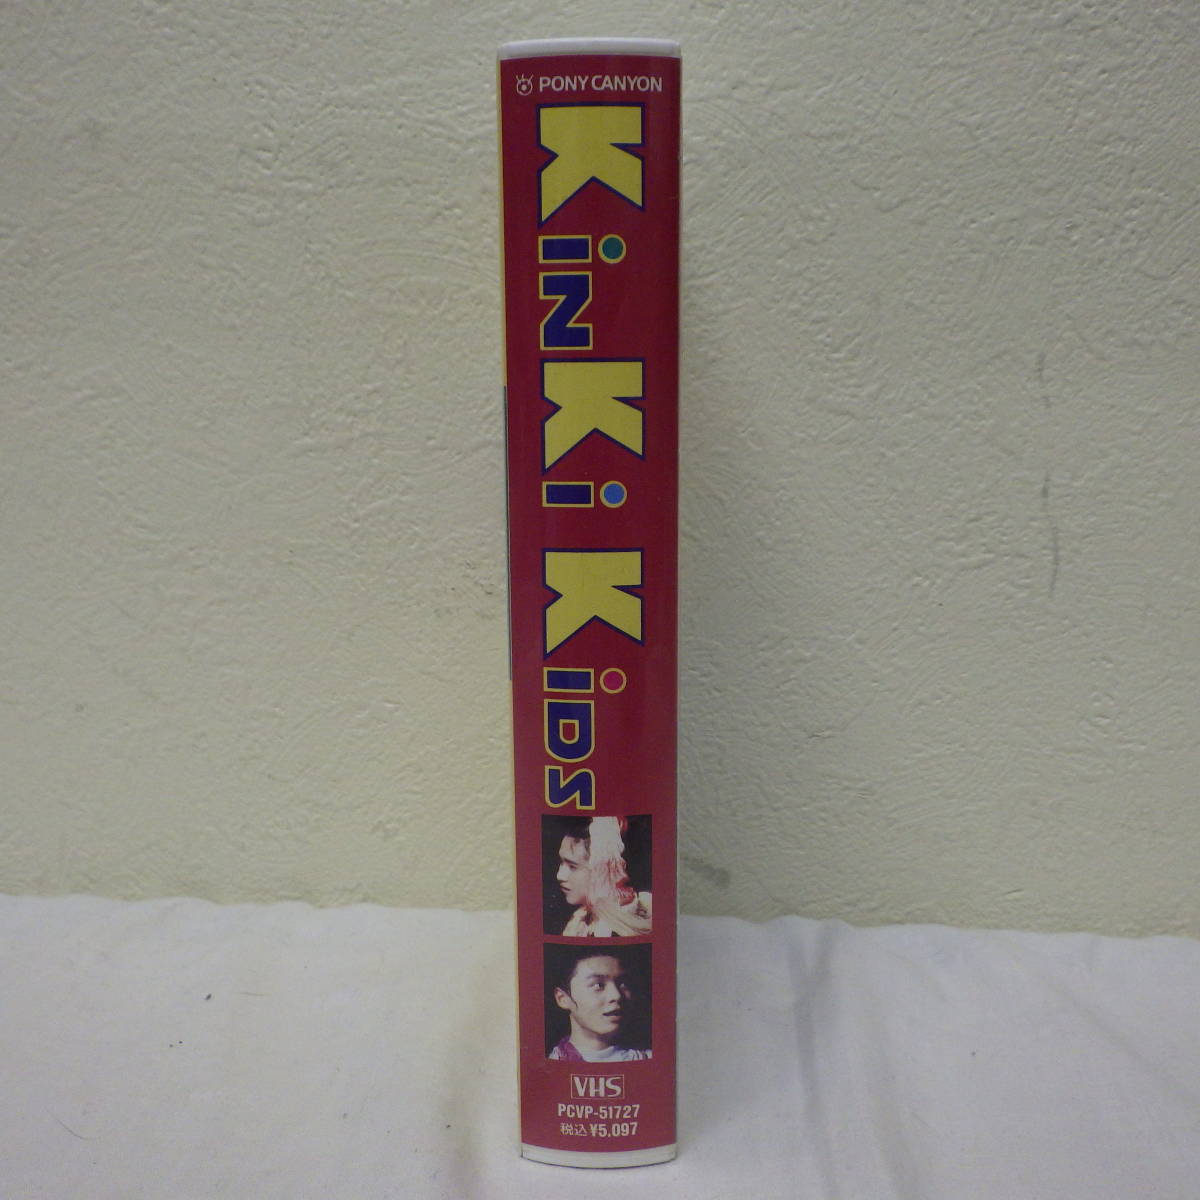 VHS Kinki Kids KinKiKids with35 десять тысяч человек вентилятор век. Live видео 